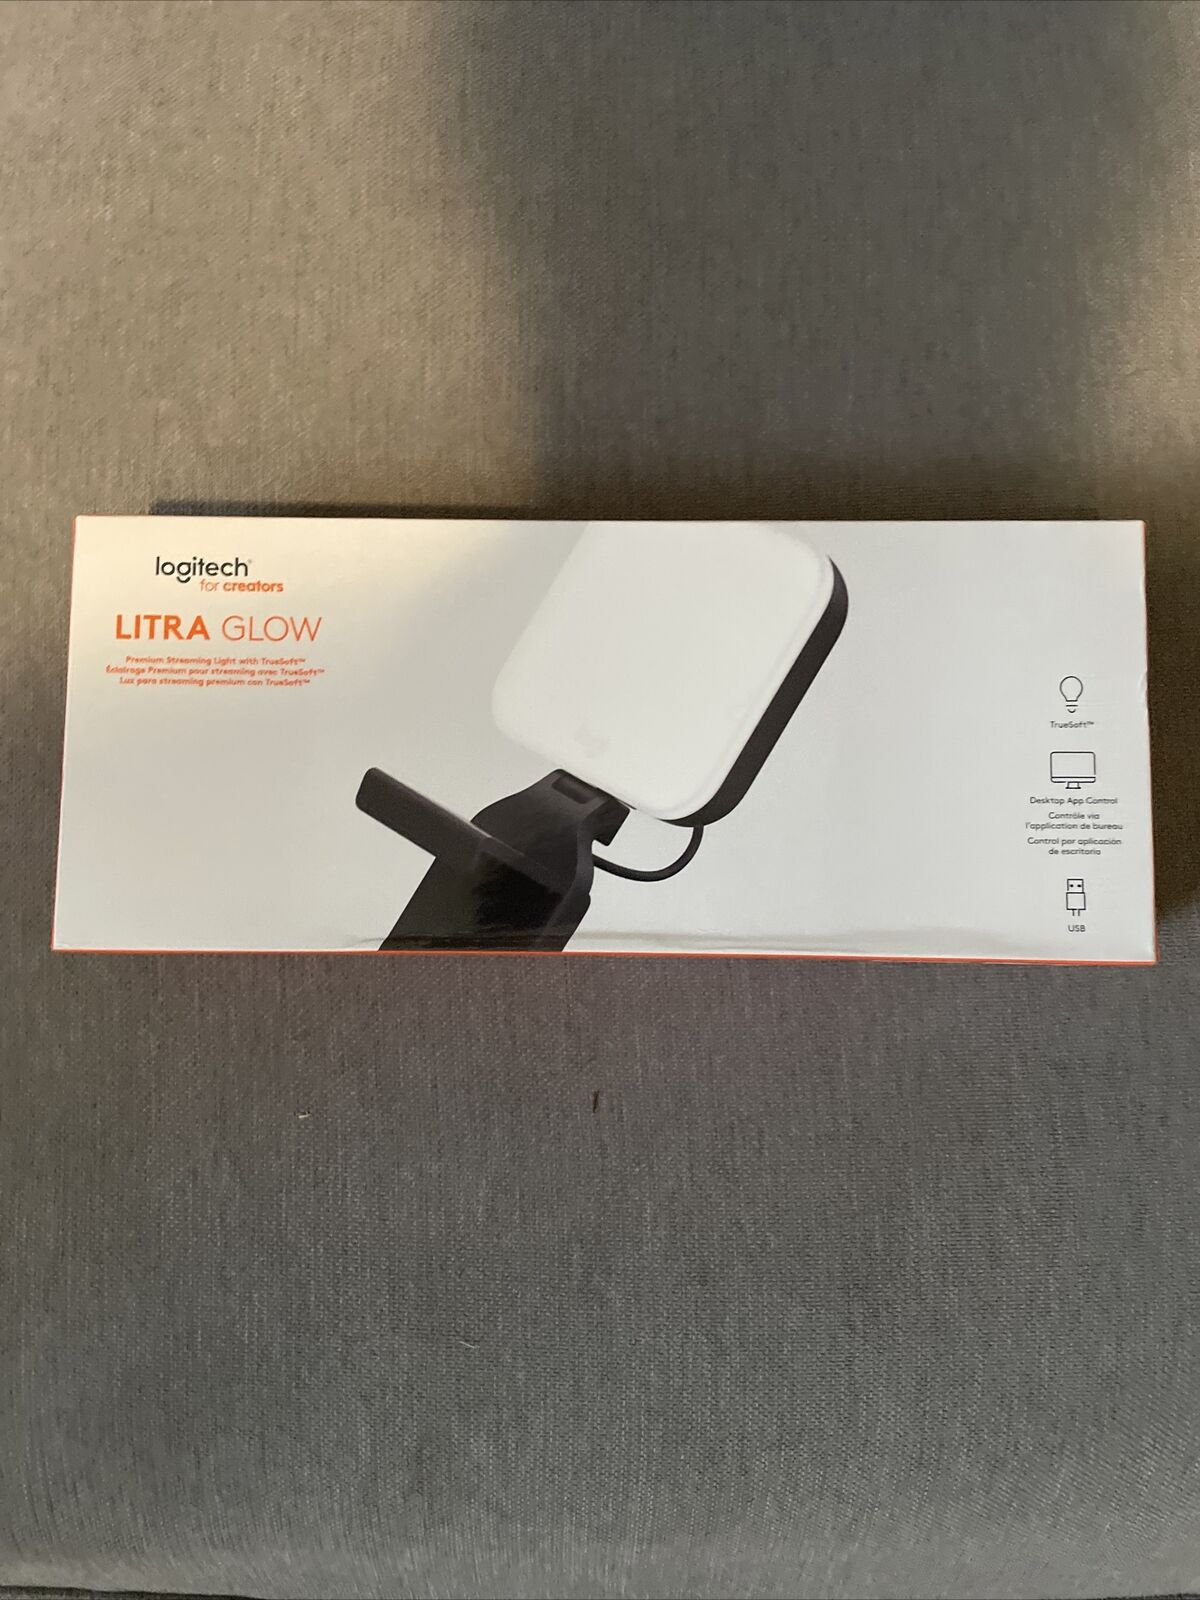 Logitech - Litra Glow Premium Led Streaming Light - Graphite [946-000001]